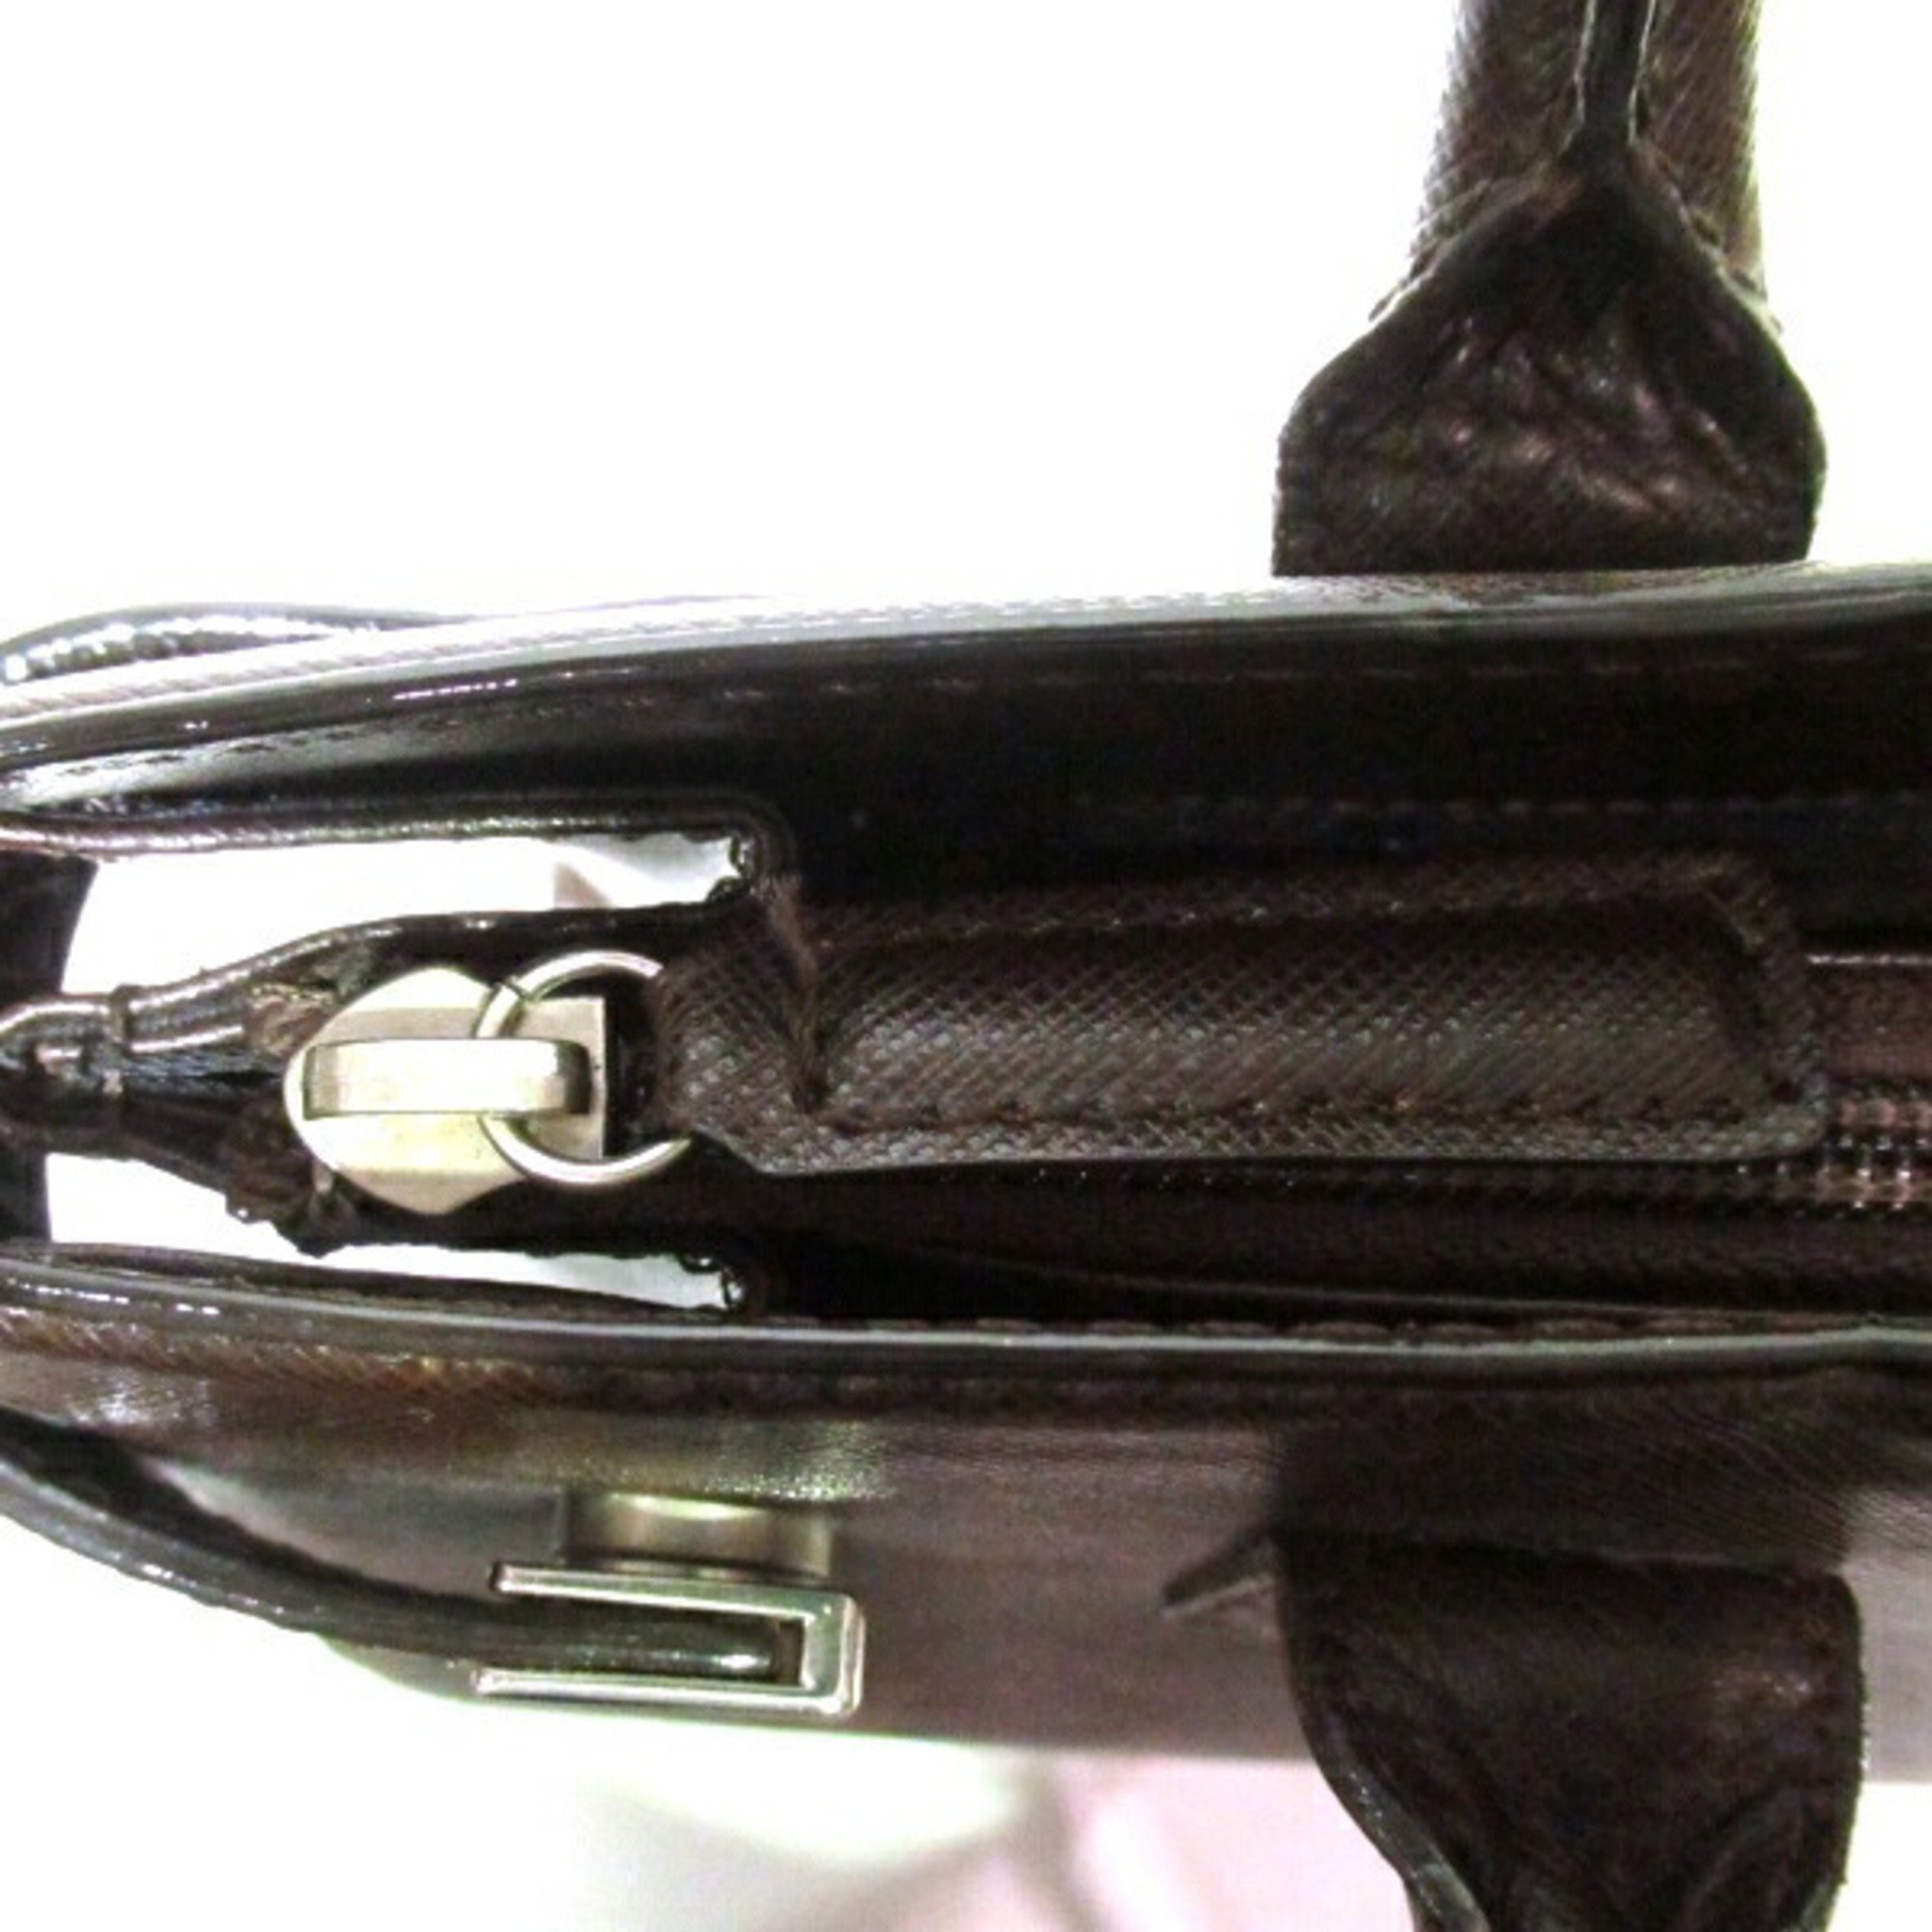 Burberry Dark Brown Leather Bag Handbag Ladies